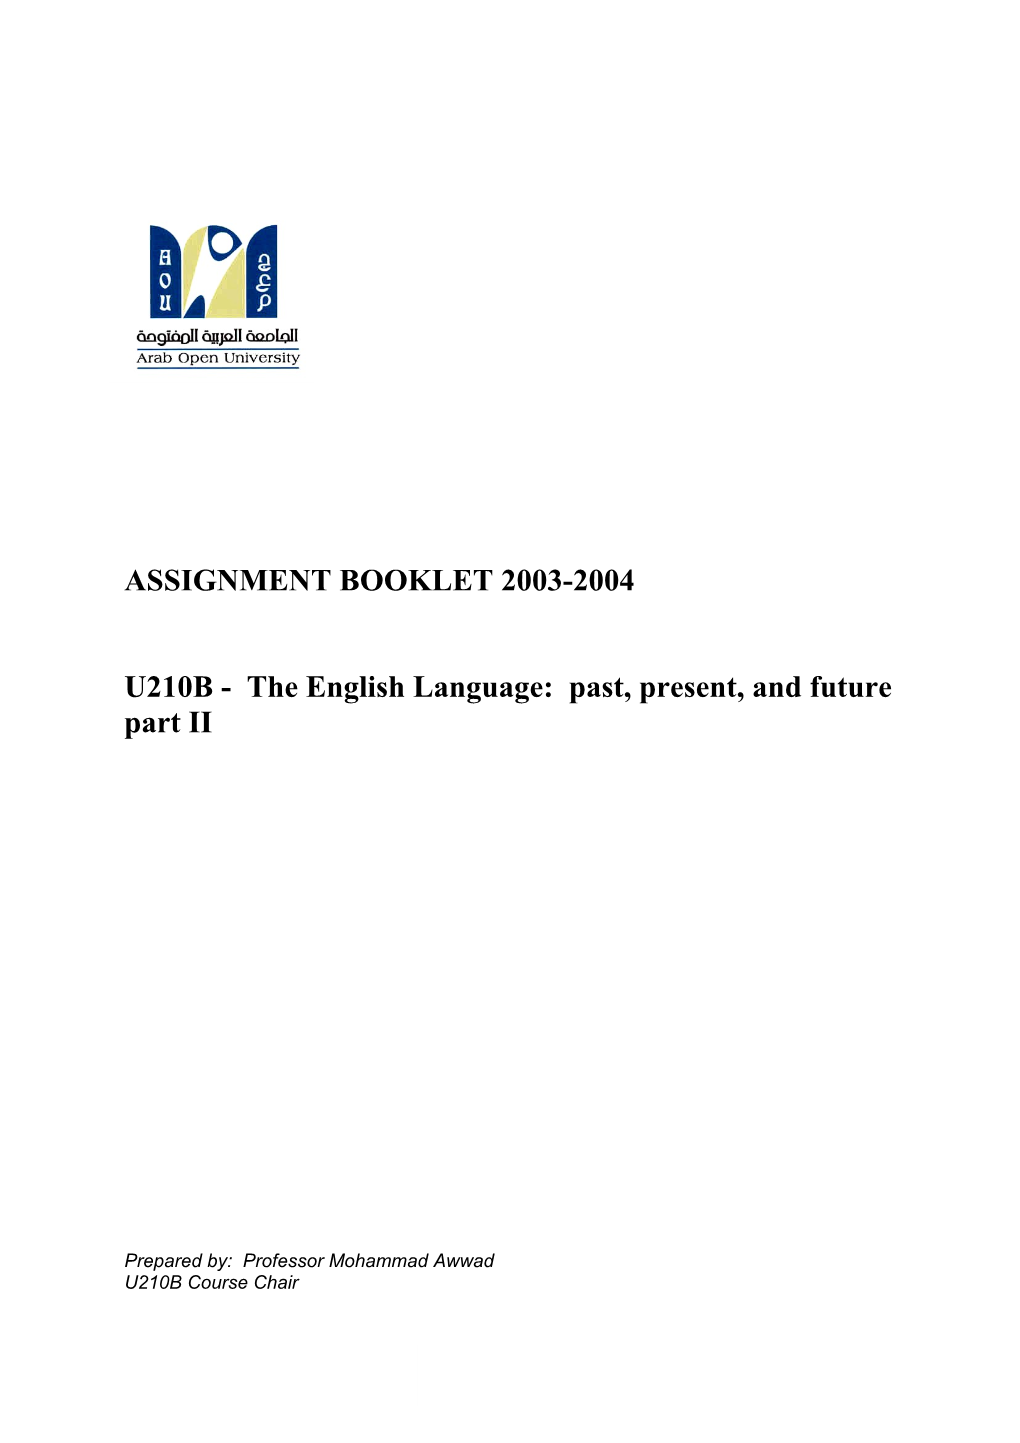 U210B - the English Language: Past, Present, and Future Part II